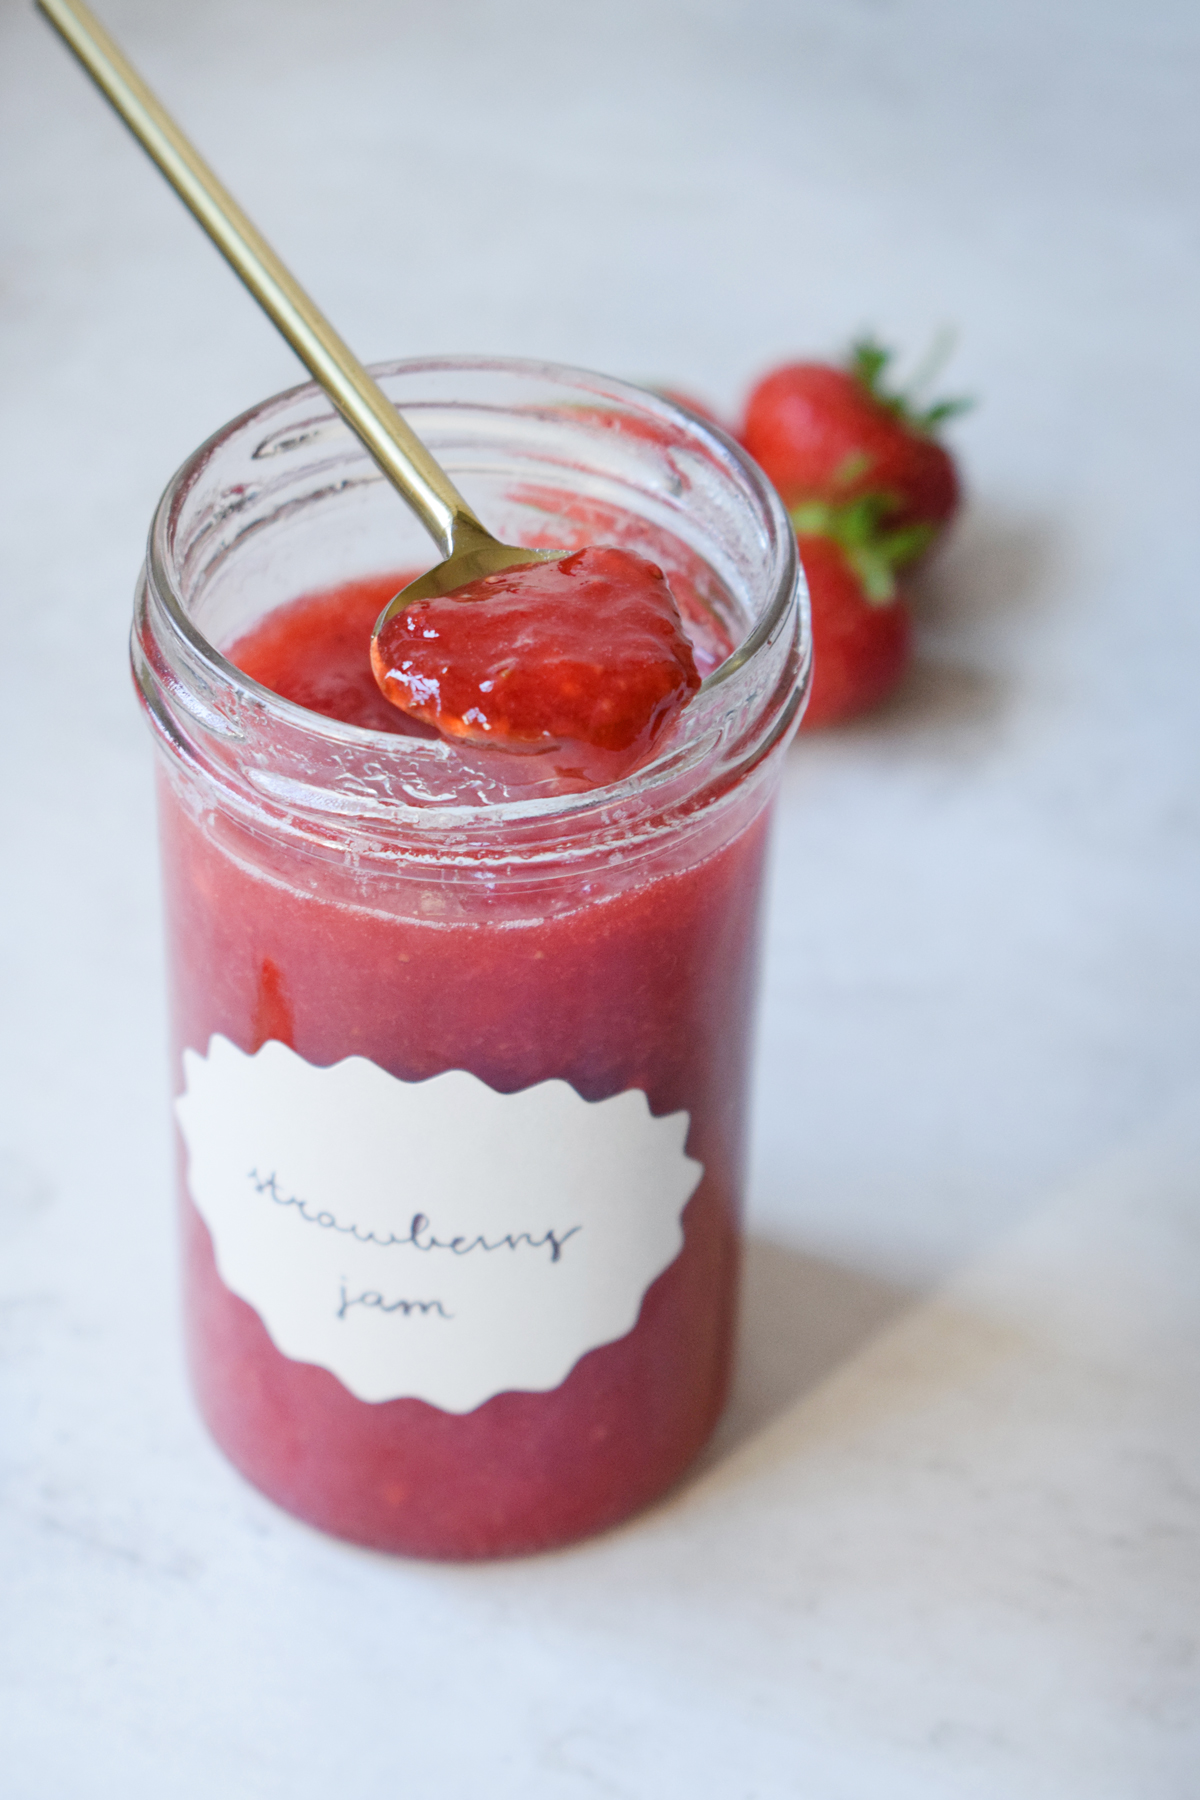 Easy Strawberry Jam (No Pectin & Small Batch) - Let's Eat Smart